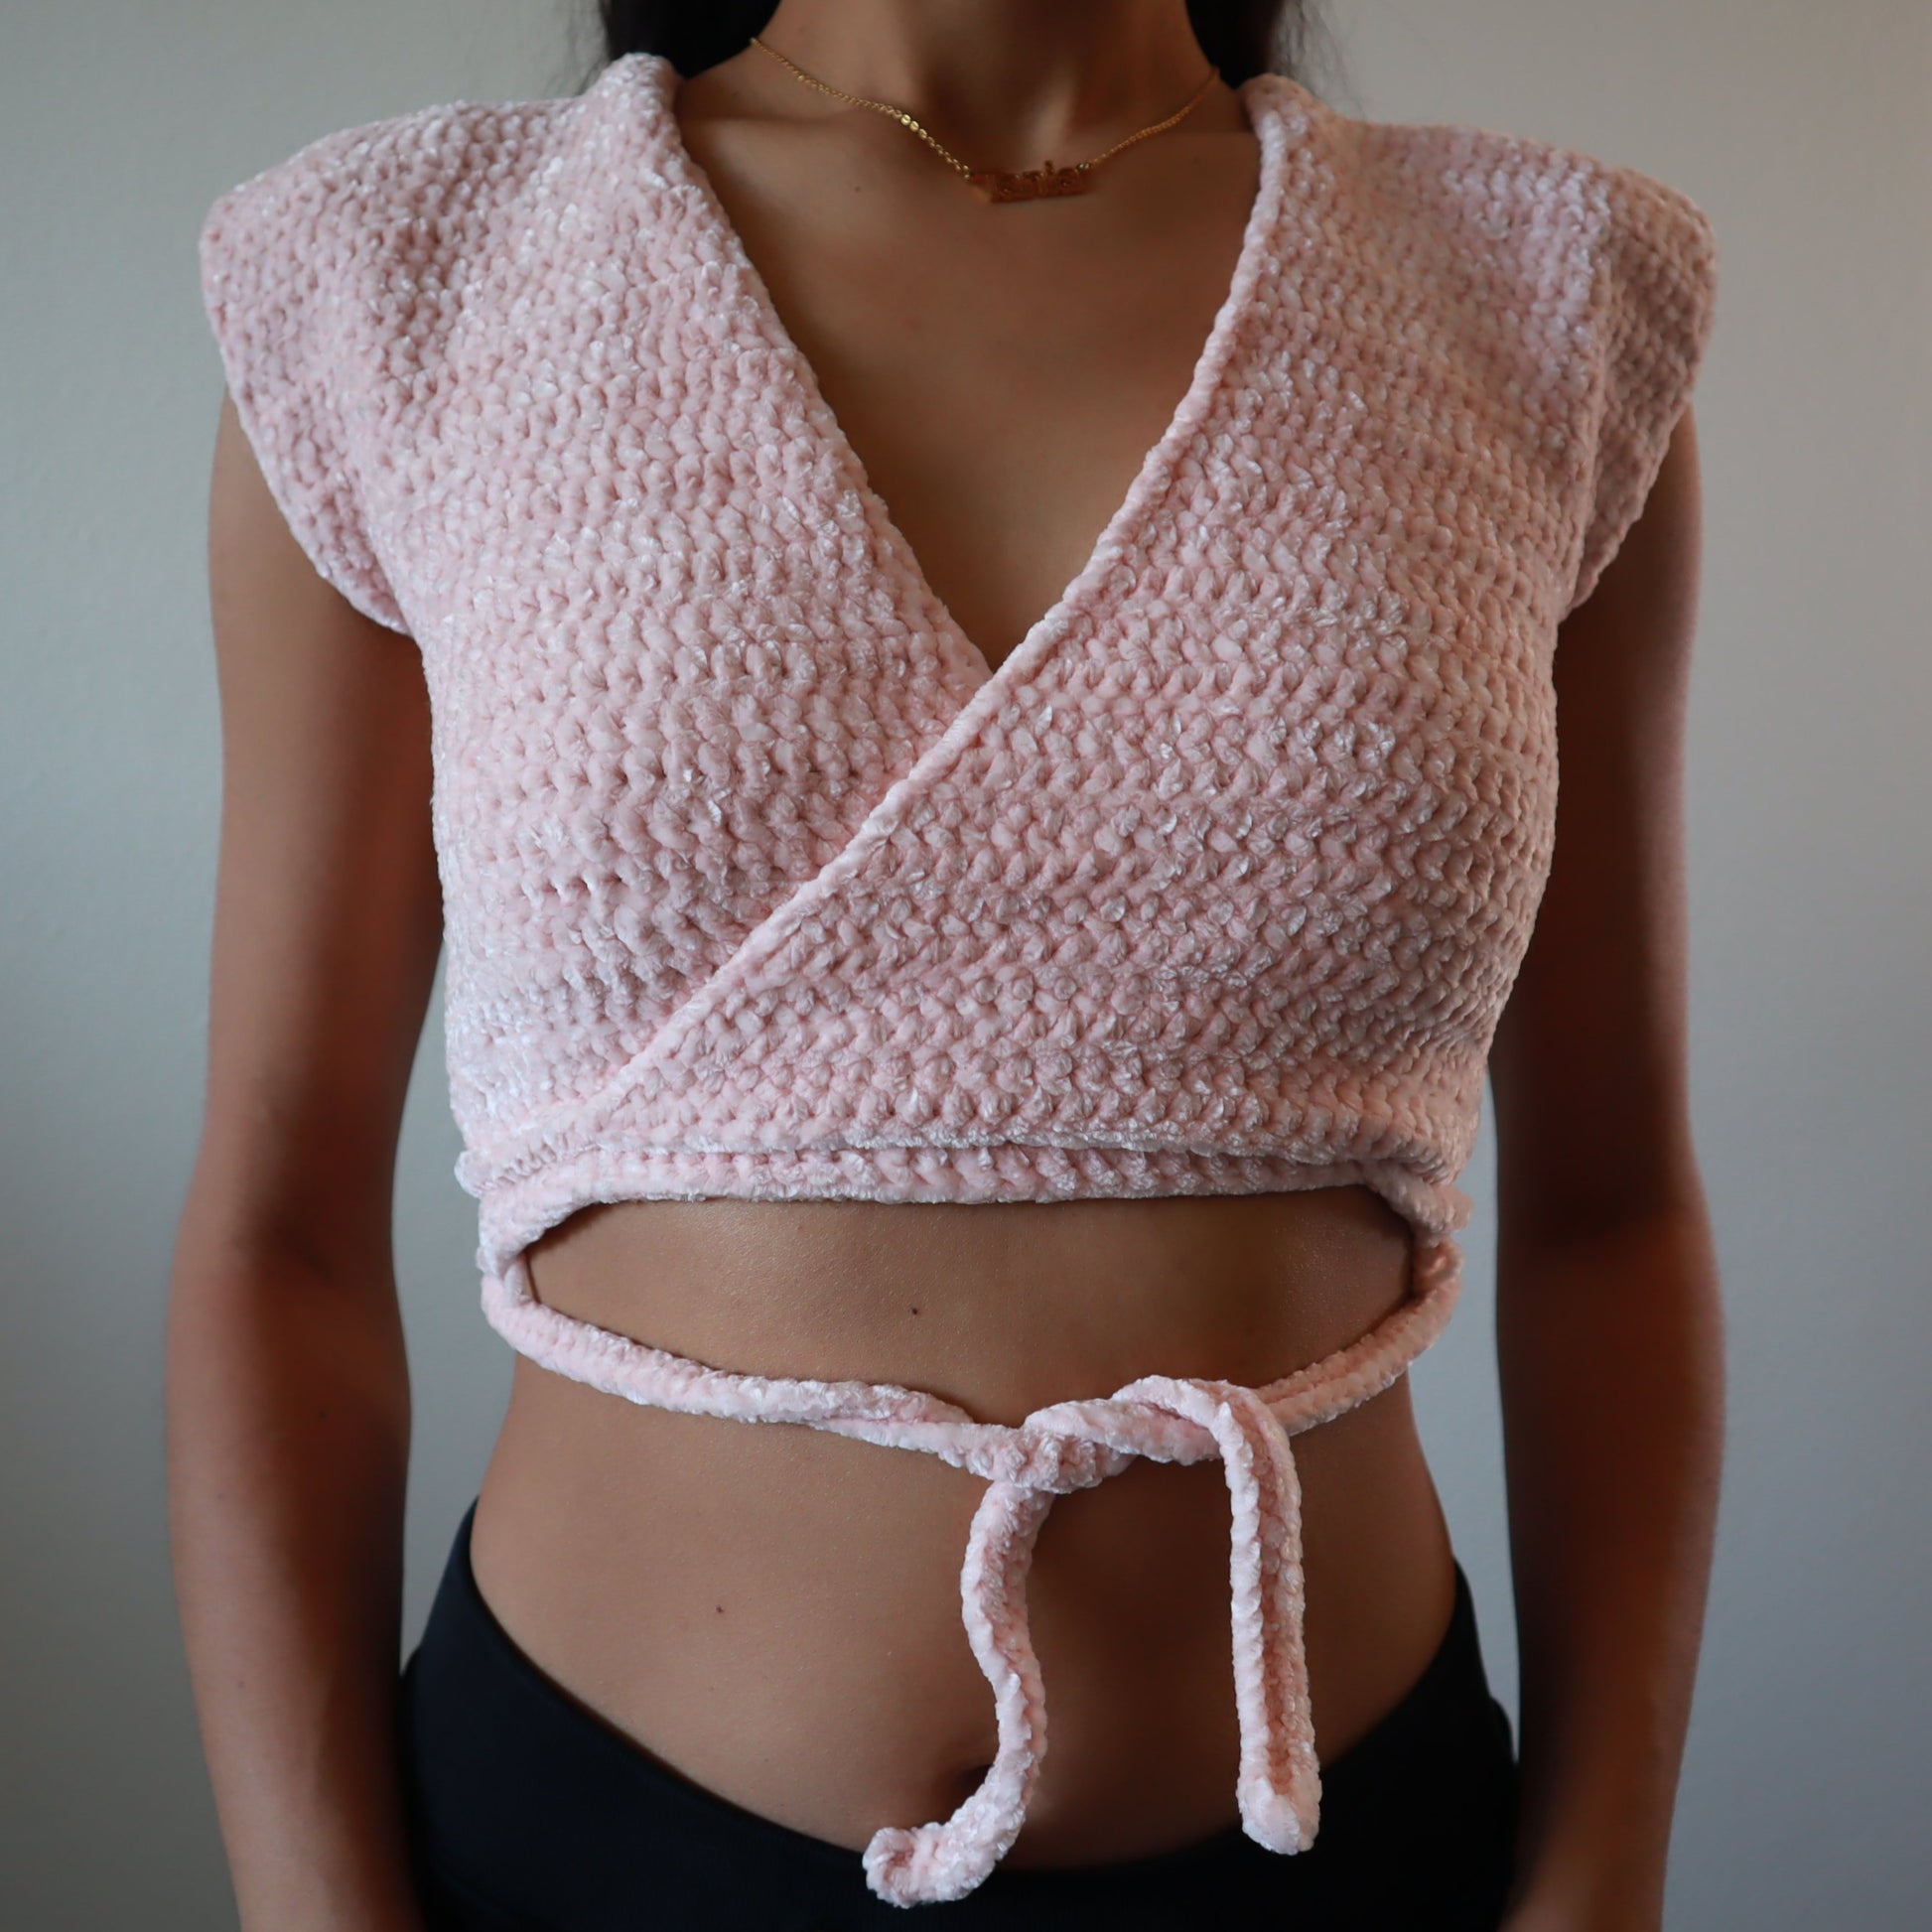 shopdigitalgirl crochet brand - light baby dusky pink chenille fabric sleeveless crochet top